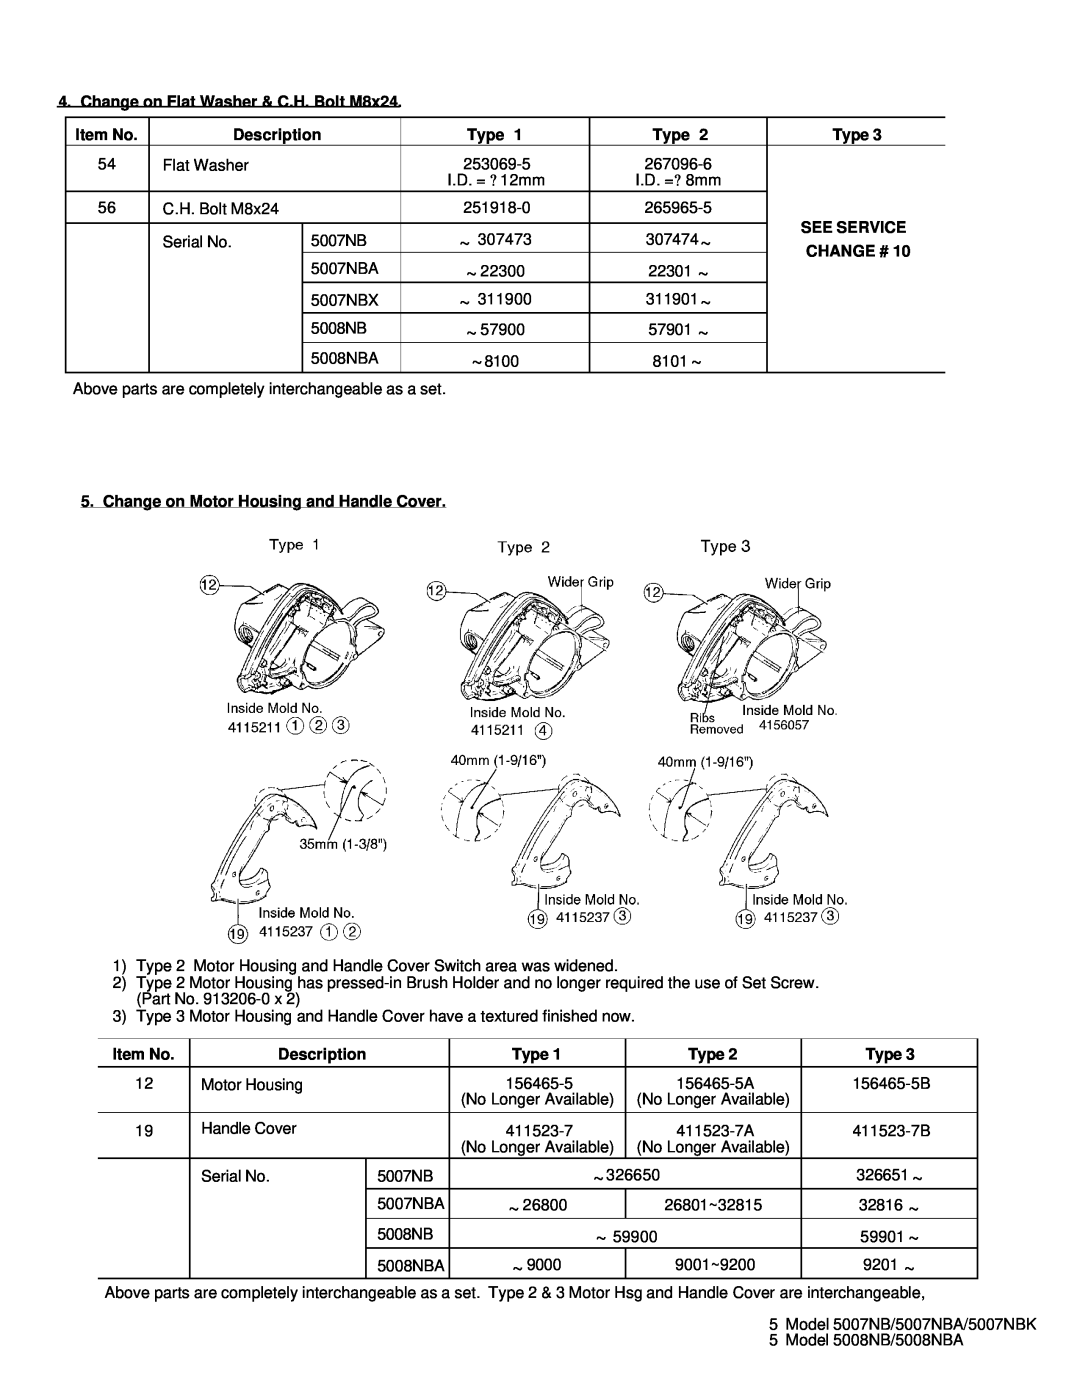 Makita 5008NBA (MCP), 5008NB(MCP), 5007NBA(MCP), 5007NB (MCP), 5007NBK (MCP) manual Change on Flat Washer & C.H. Bolt M8x24 